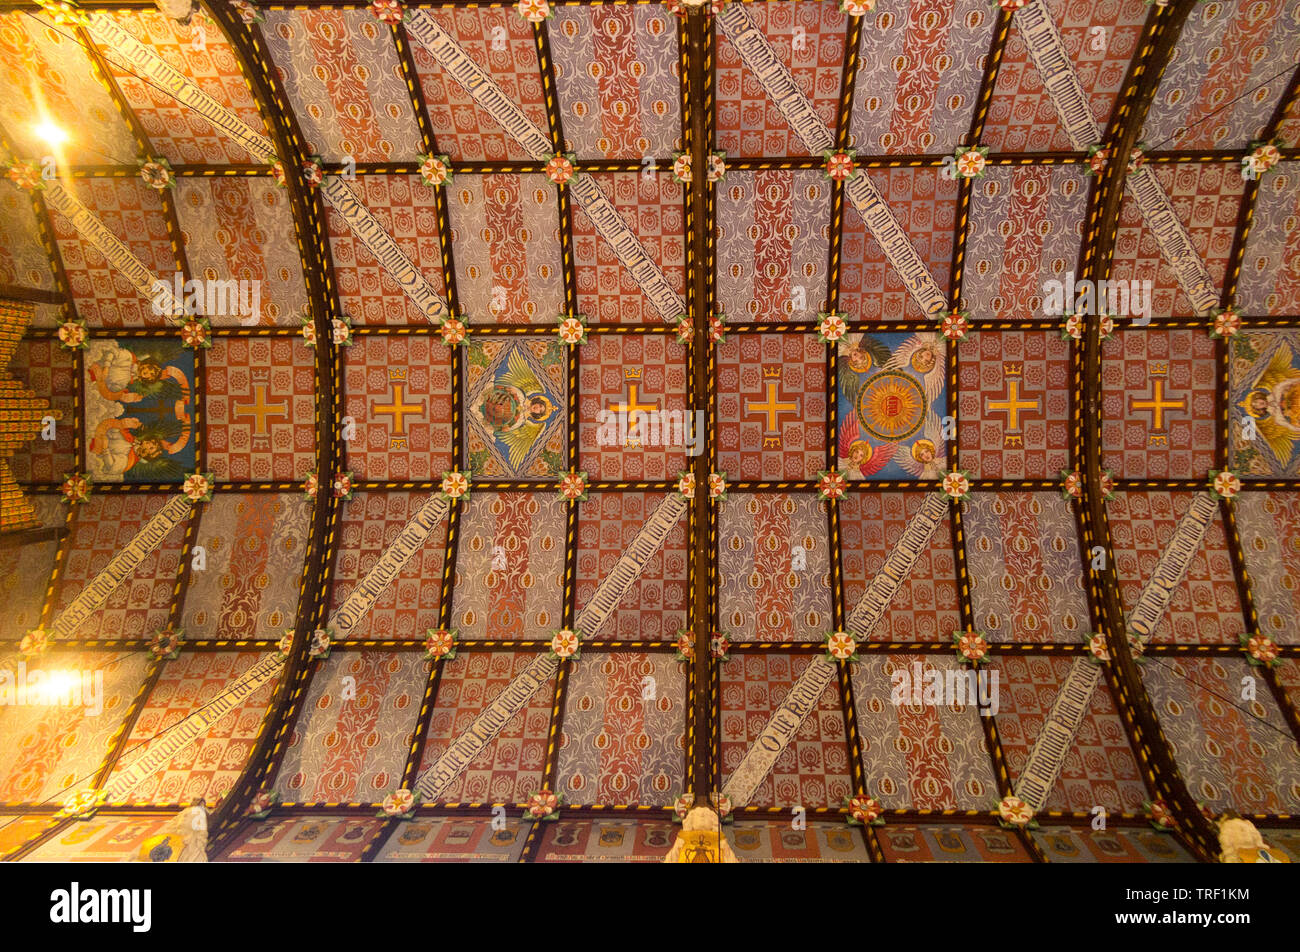 Verzierte Decke/Dach des Hl. Nikolaus-in-Castro Kapelle. Carisbrooke Castle auf der Isle of Wight. UK. (99) Stockfoto